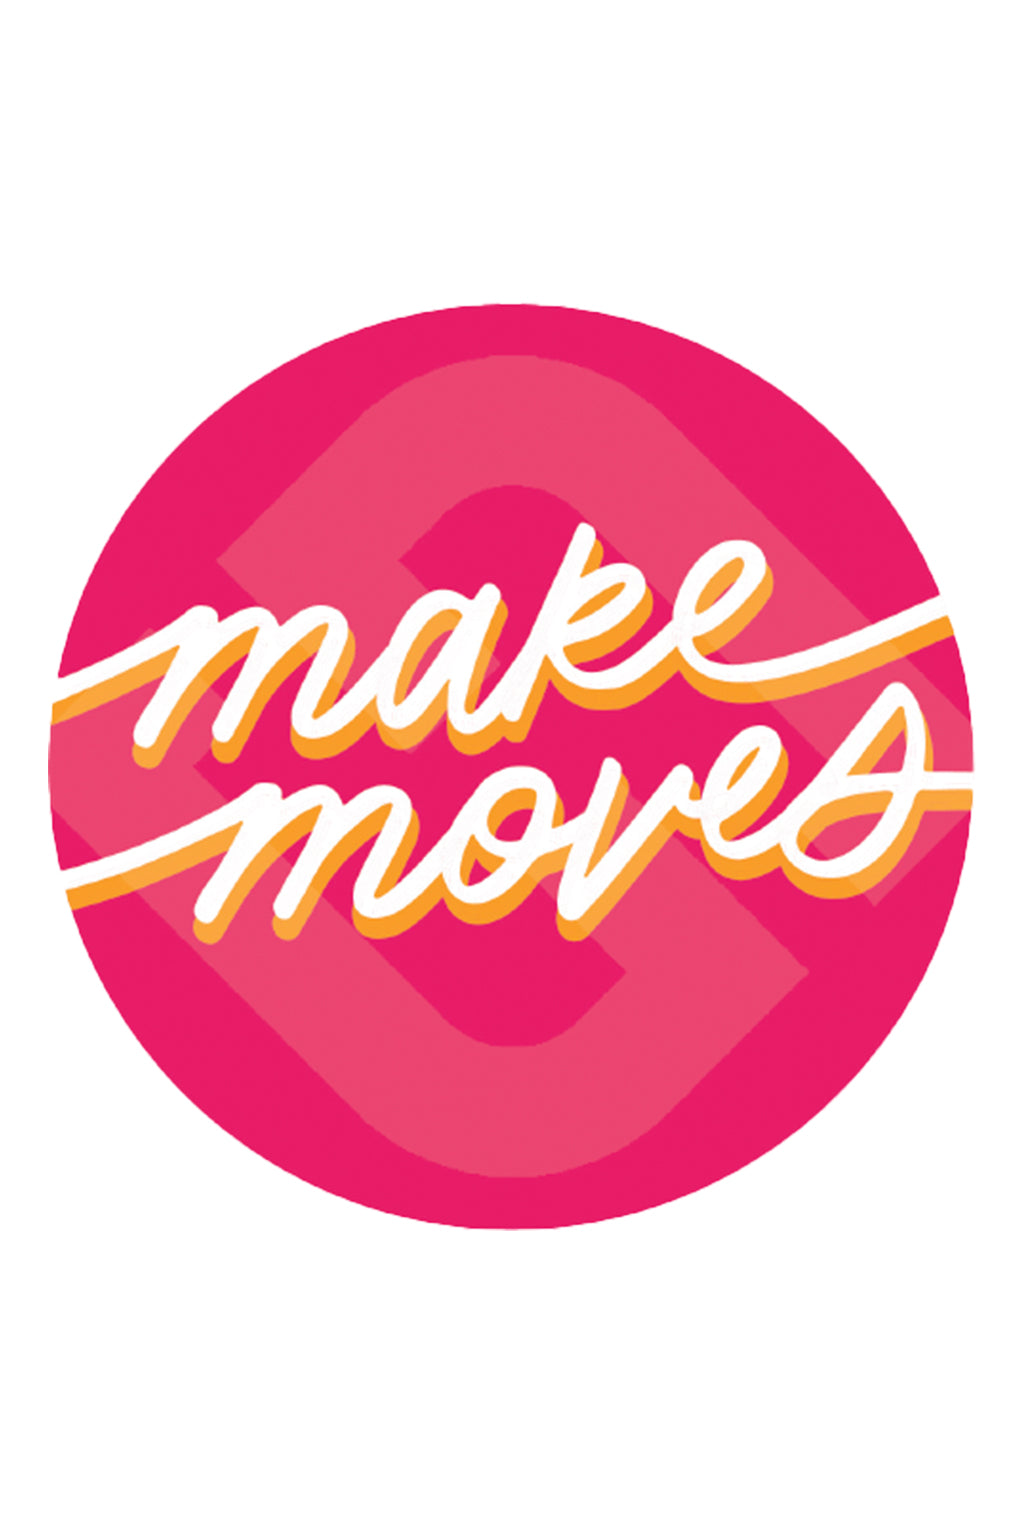 Pink 3" round vinyl sticker that says "Make moves"